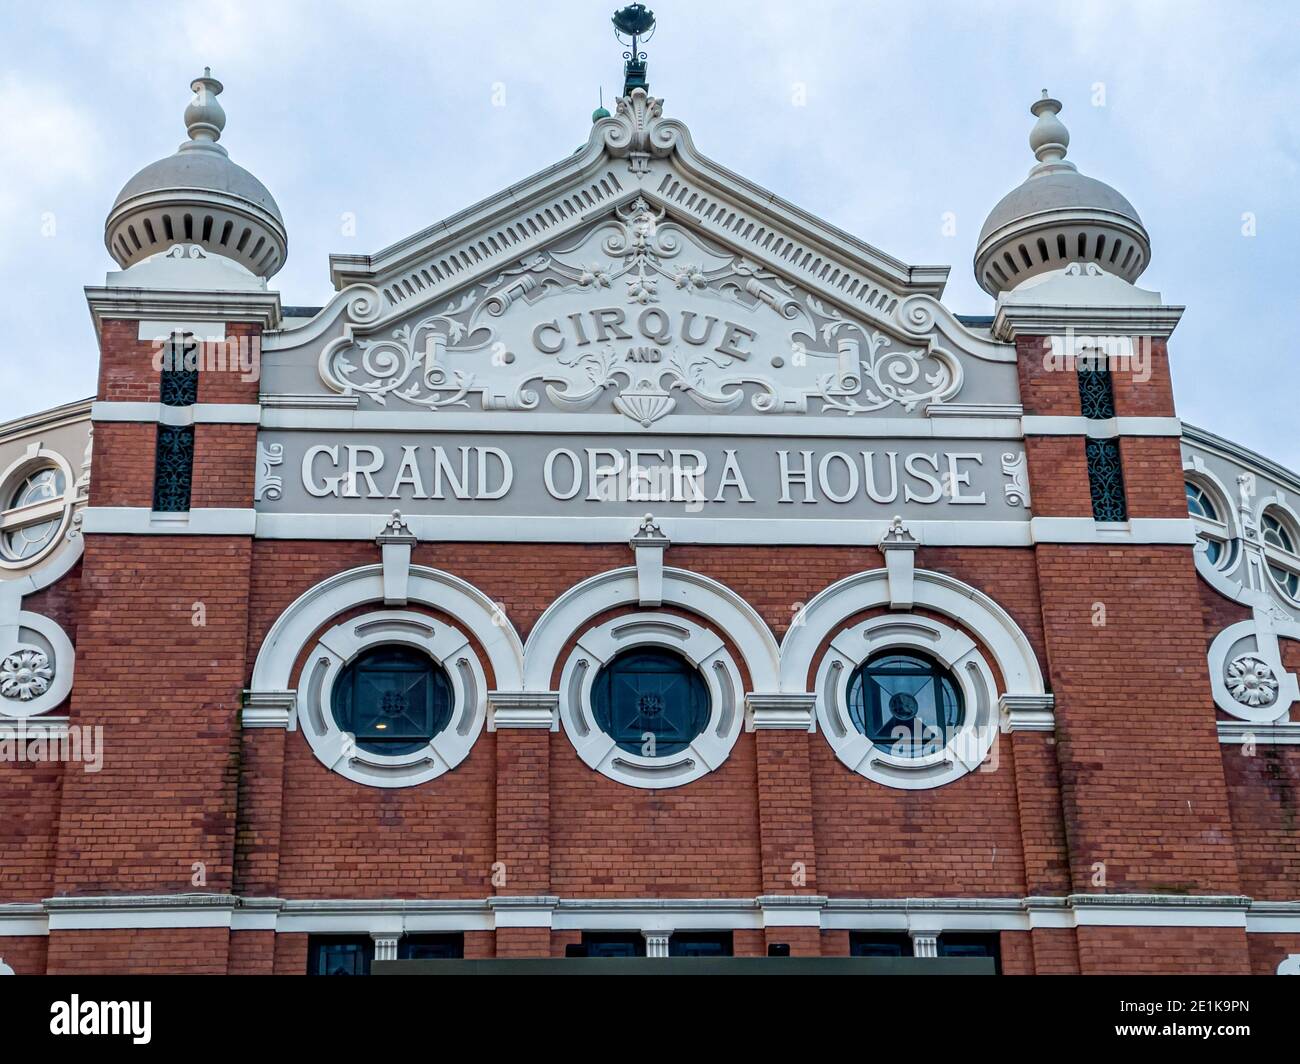 Belfast, Northern Ireland - Dec 19, 2020: The Grand Opera House in Belfast. Stock Photo